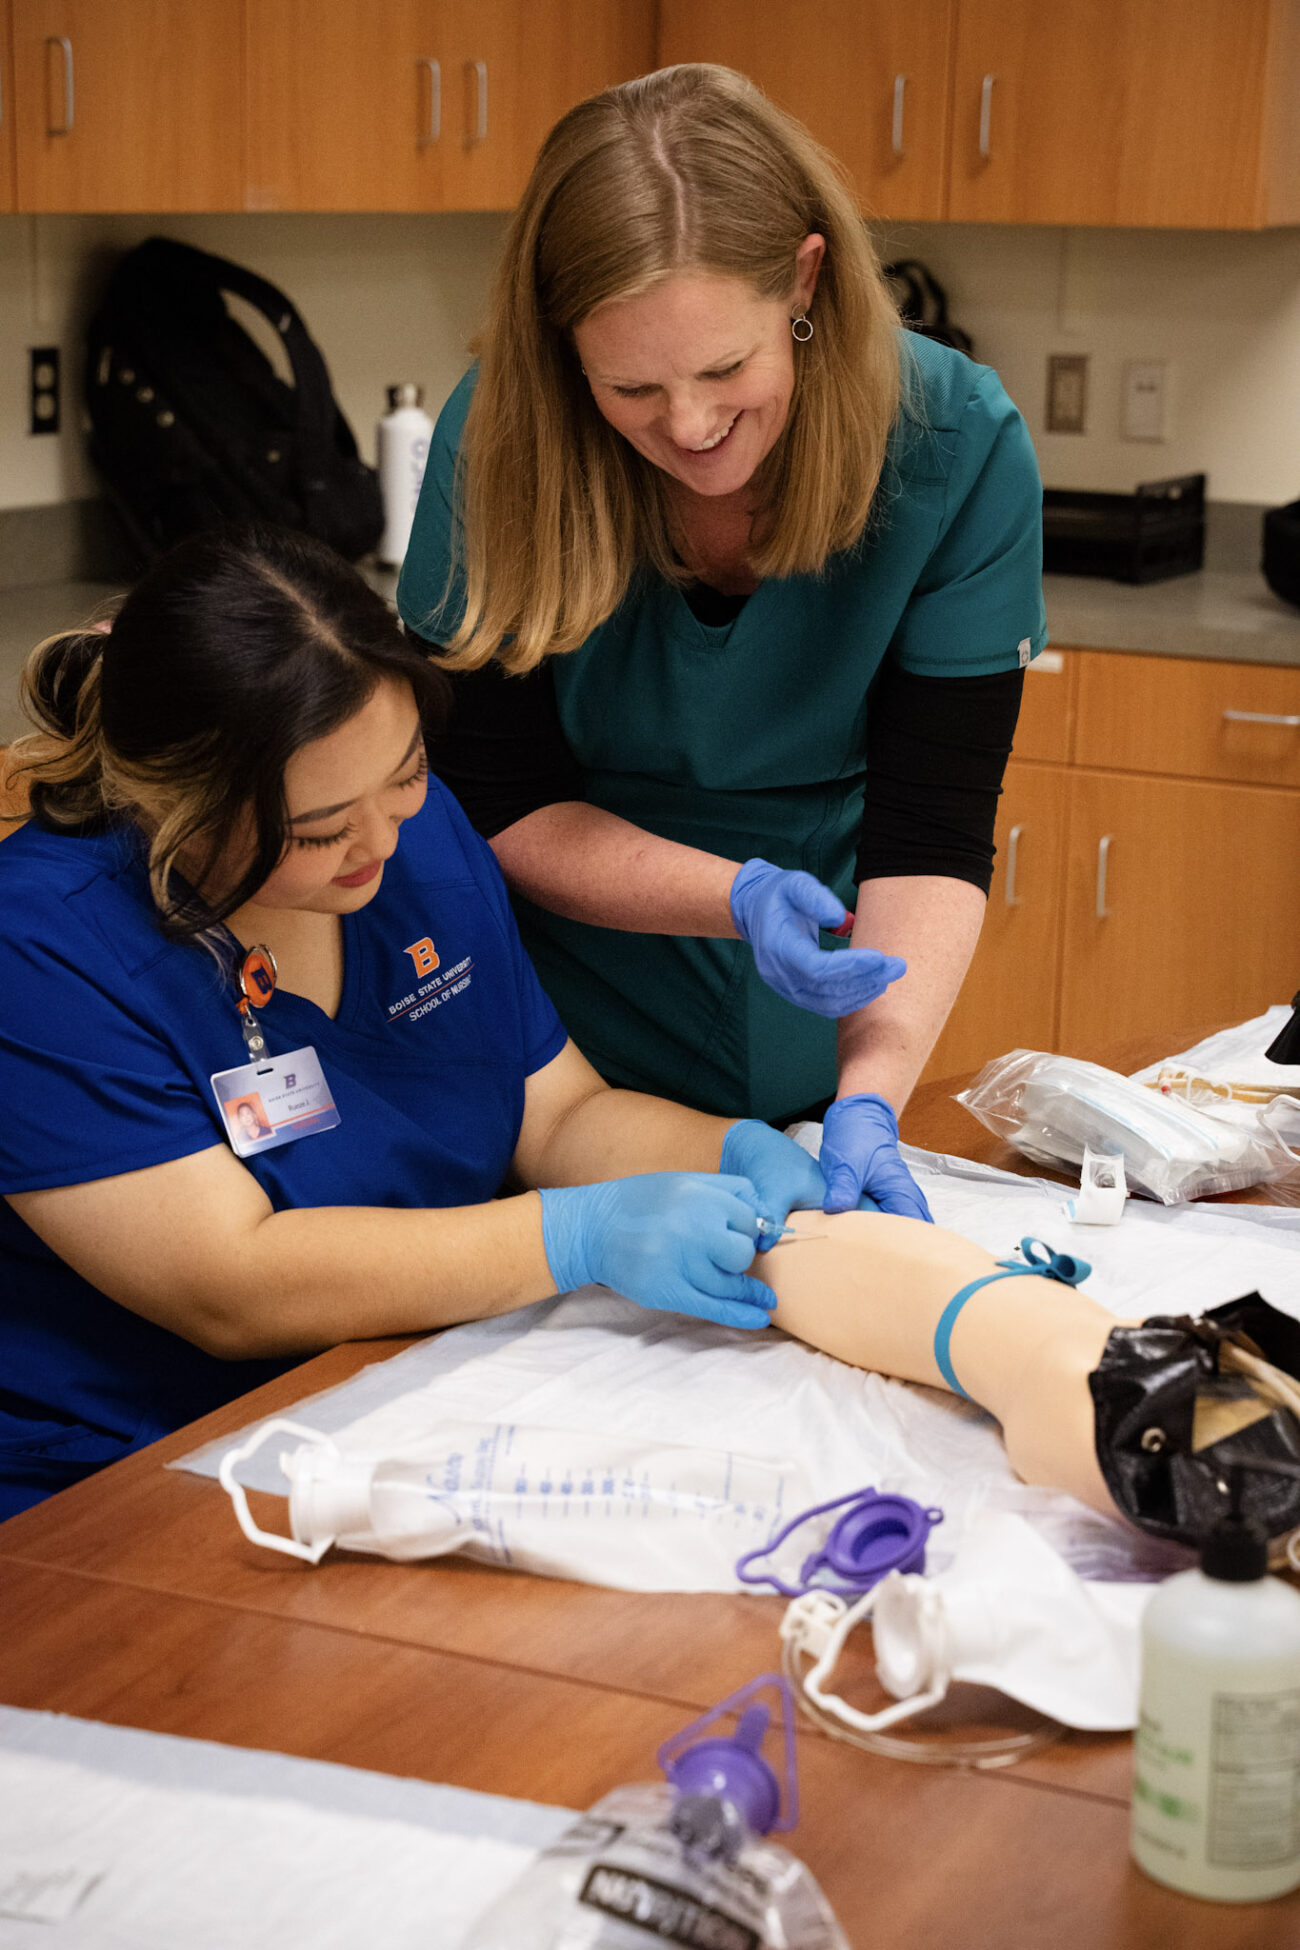 A nursing professor helps a student nurse insert an IV line in a manikin arm.